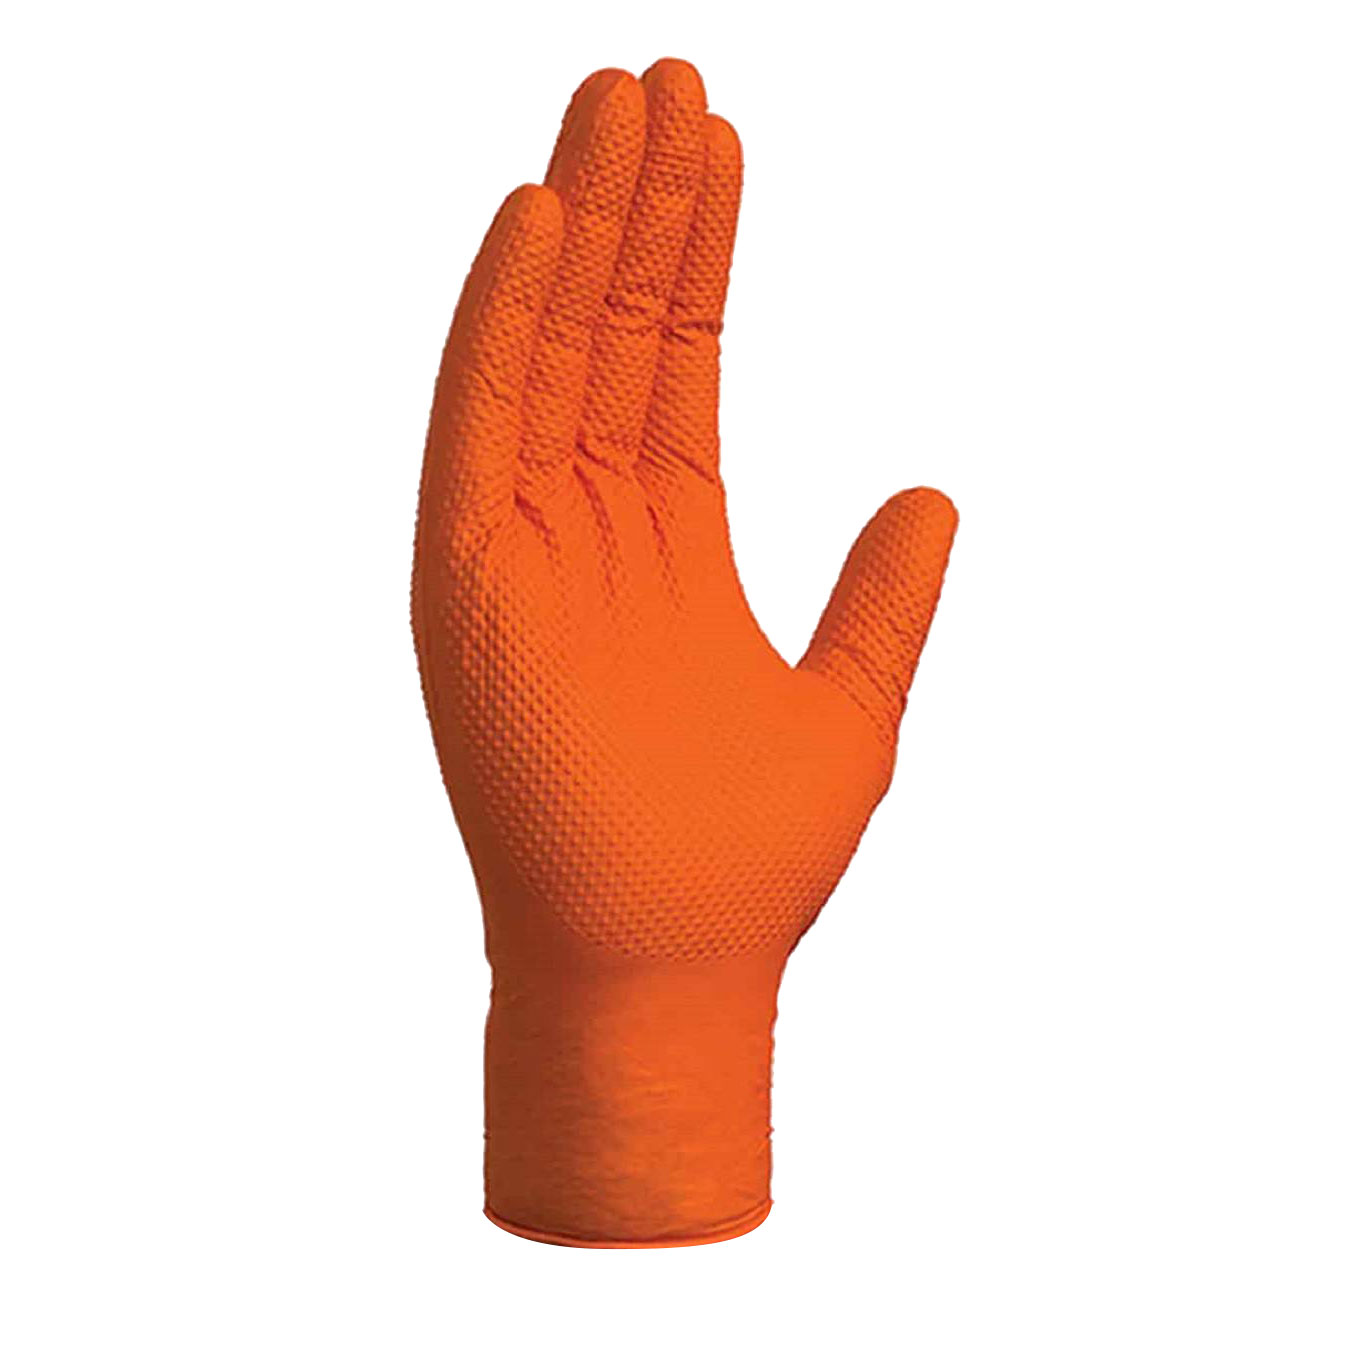 Gloveworks Heavy Duty Nitrile Gloves, Orange, Small, 100/Box 